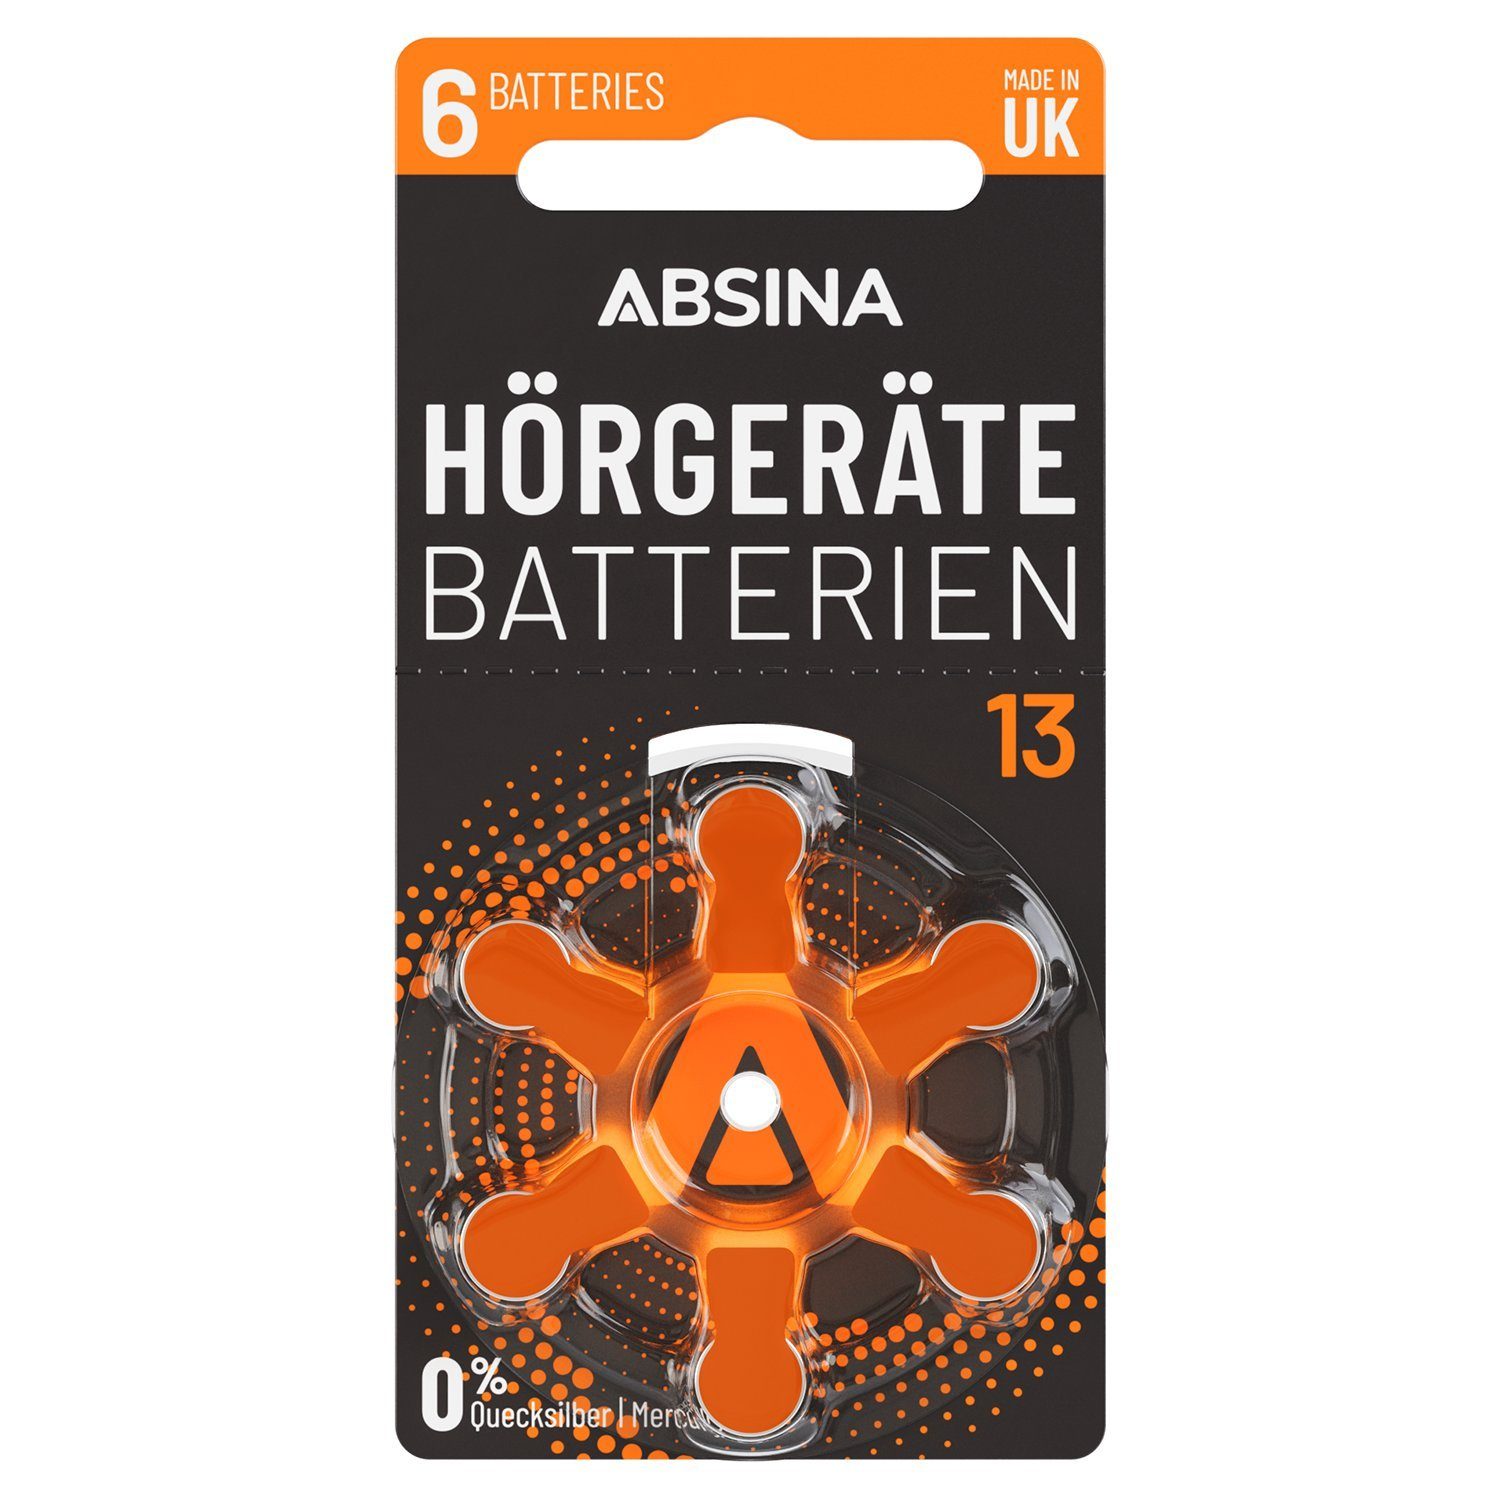 ABSINA 6x Hörgerätebatterien 13 - Hörgeräte Batterien orange 13 PR48 ZL2 P13 Knopfzelle, (1 St) | Knopfzellen